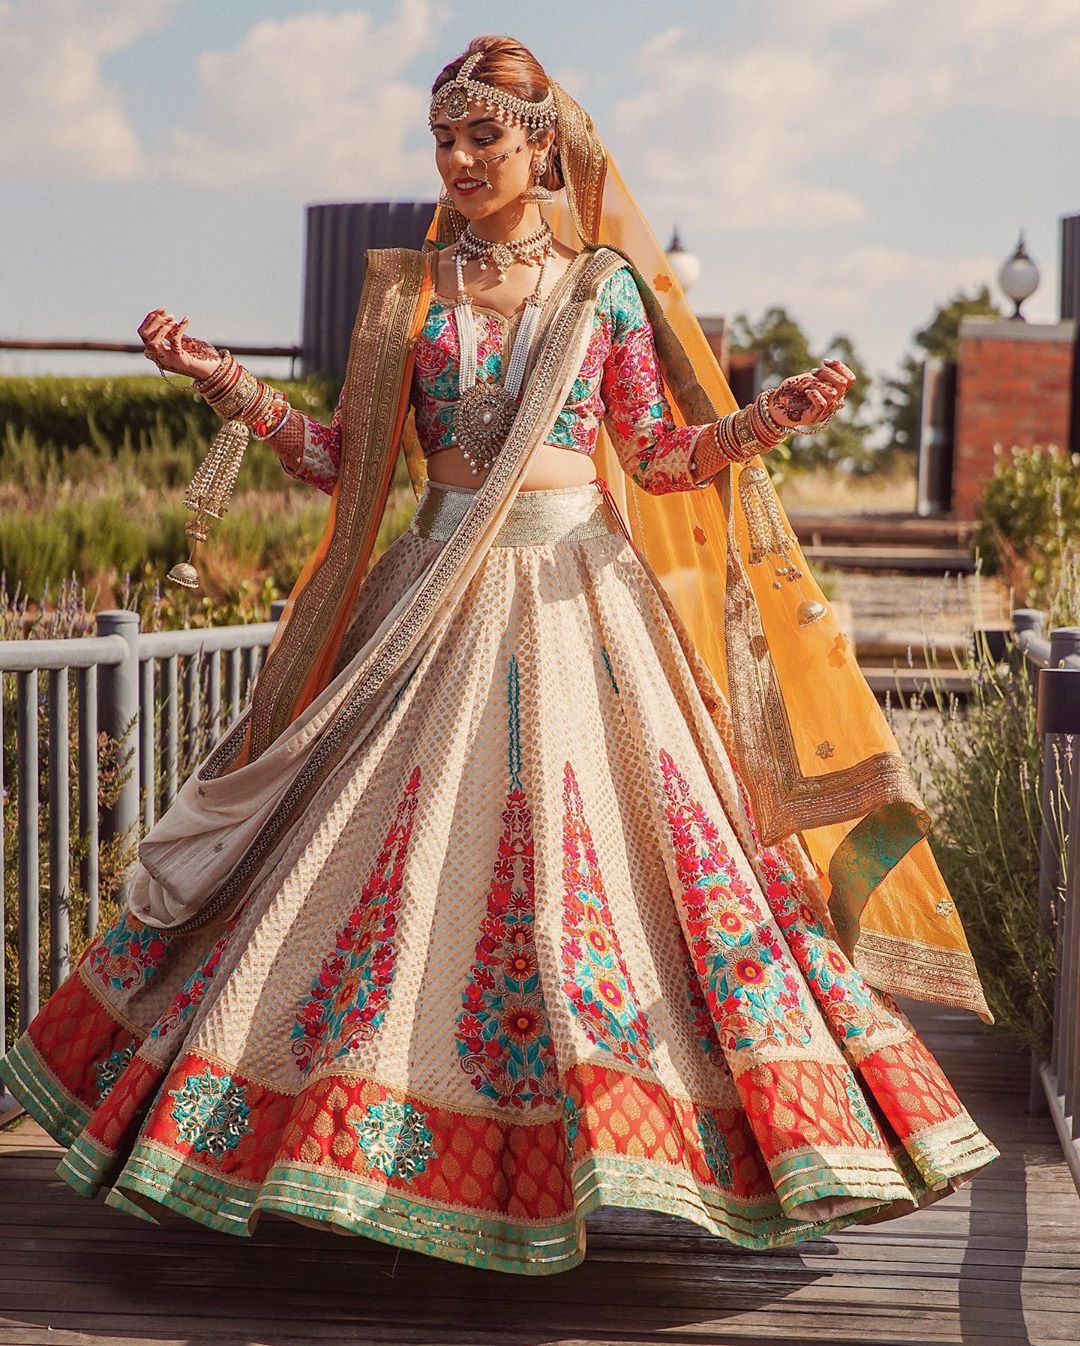 Bajirao Mastani' in Indian Fashion Updates | Scoop.it